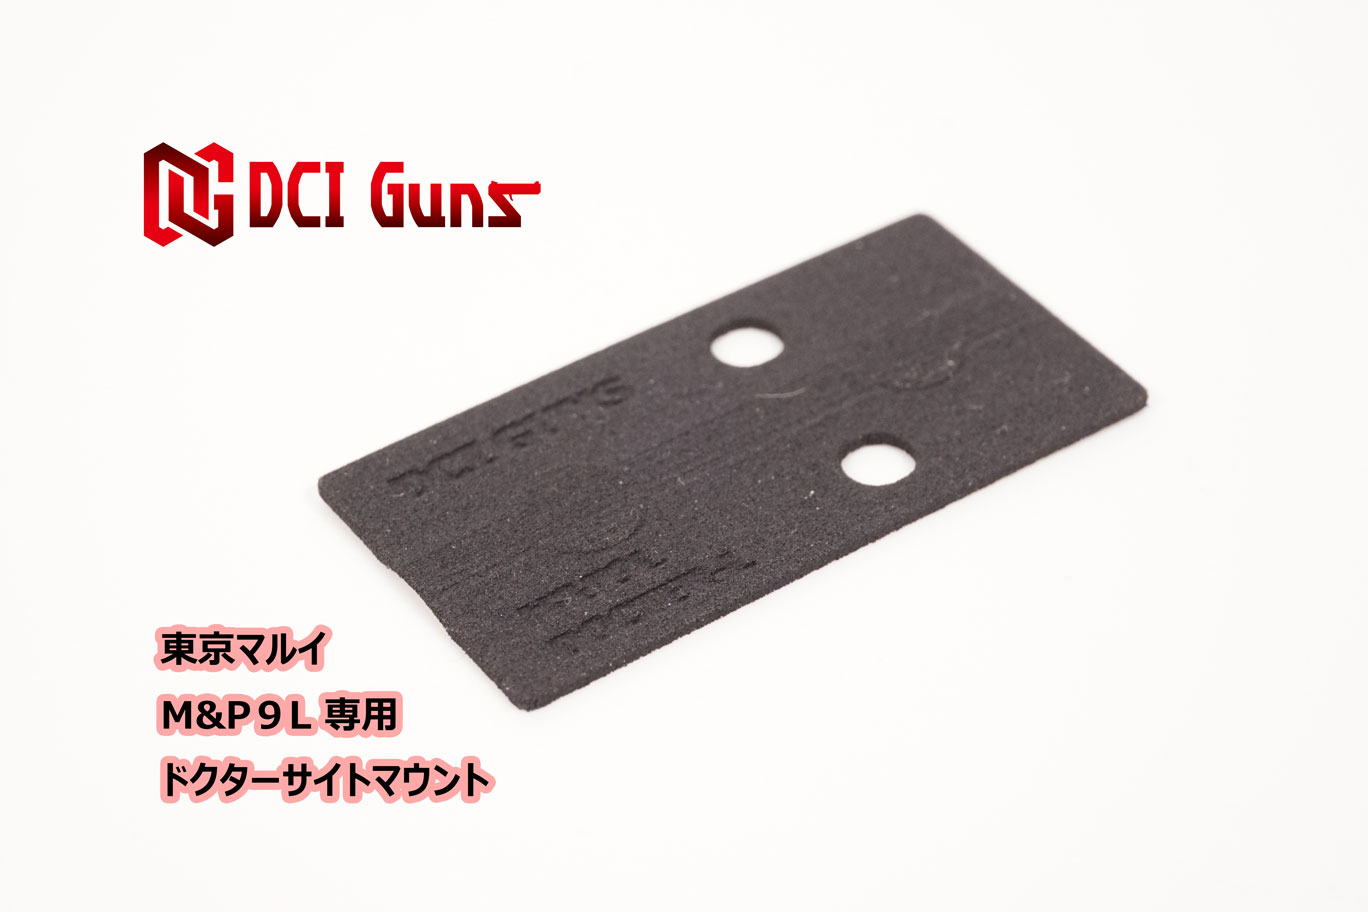 DCI Guns 東京マルイ M P9L用ドクターサイトマウントV2.0 エアガン エアーガン ガスガン ブローバック カスタムパーツ ダットサイト ドットサイト 光学機器 スライド 直付け サバゲー サバイバルゲーム マイクロプロサイト